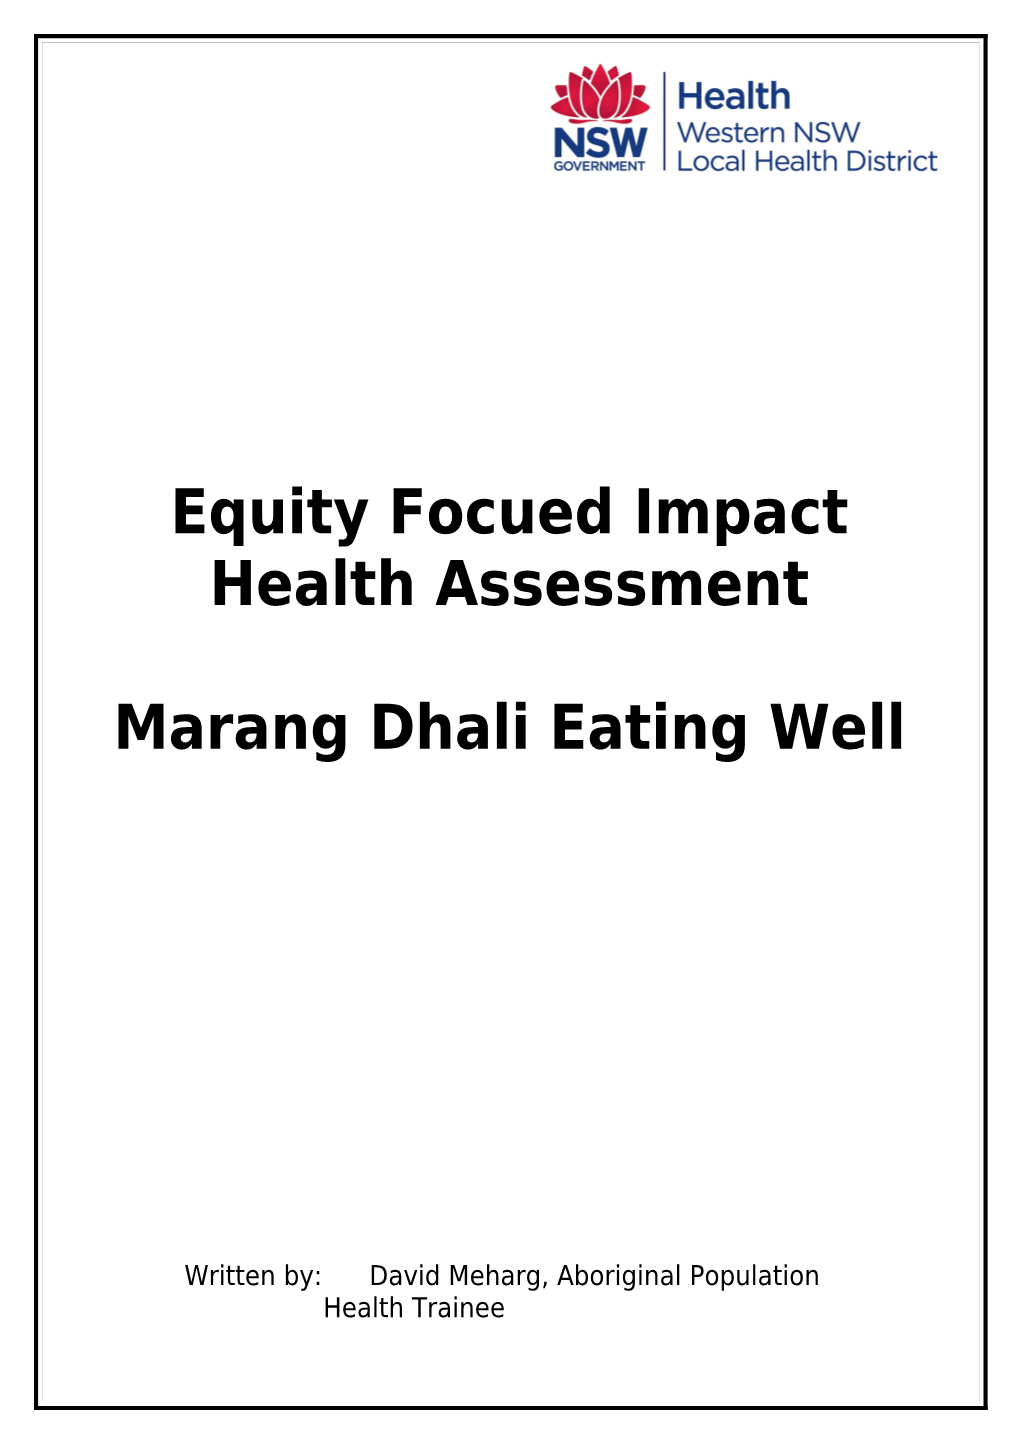 Literature Review: Marang Dhali Eating Well Program